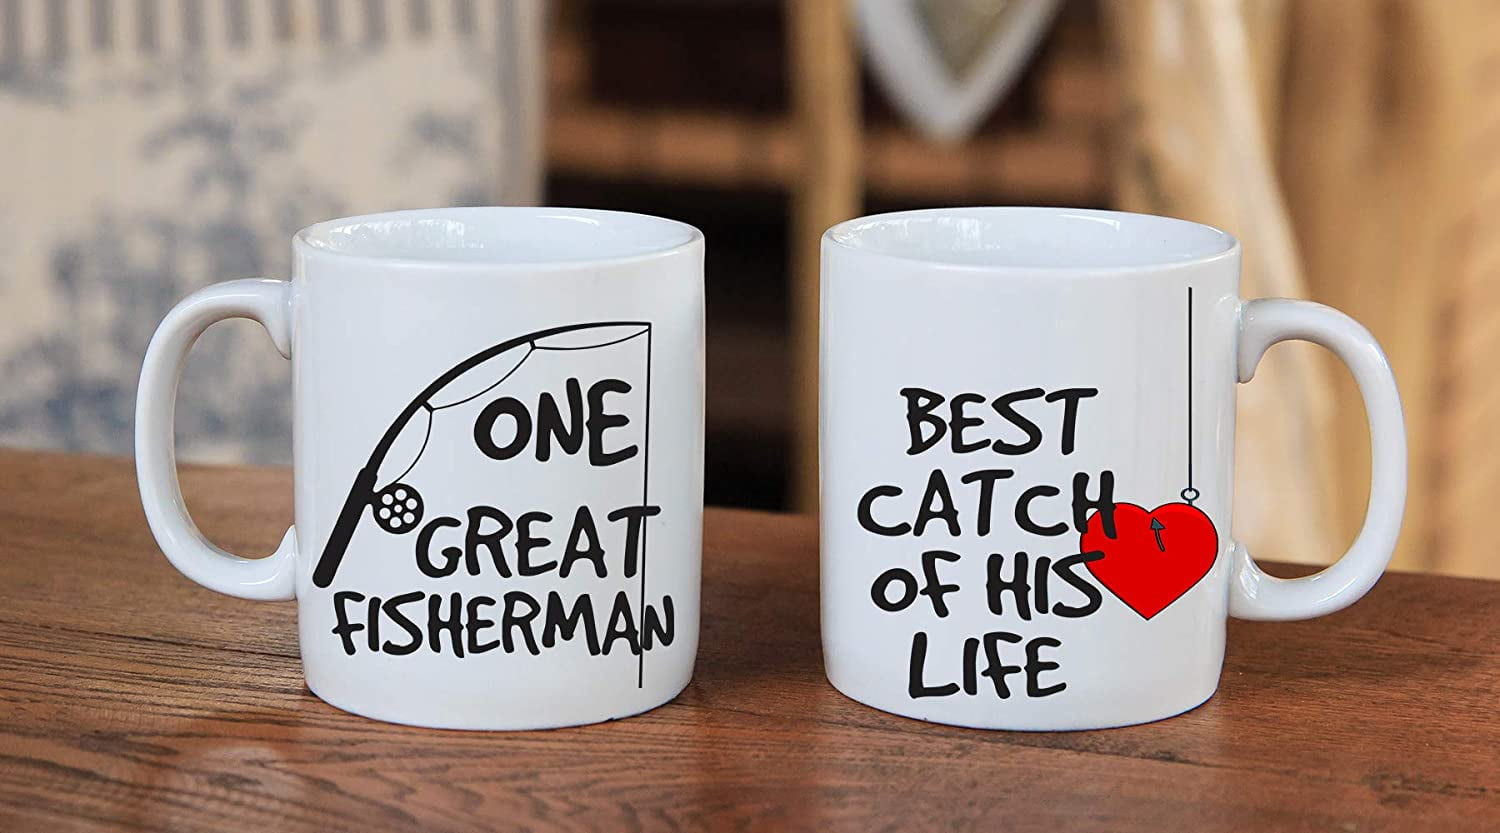 One Great Fisherman, Best Catch Of His Life Couples Mug - Funny Couple Mug  - (2) 11OZ Coffee Mug - Funny Mug Gift Set - Mugs For Husband and Wife -  Him And Her Gifts - By 